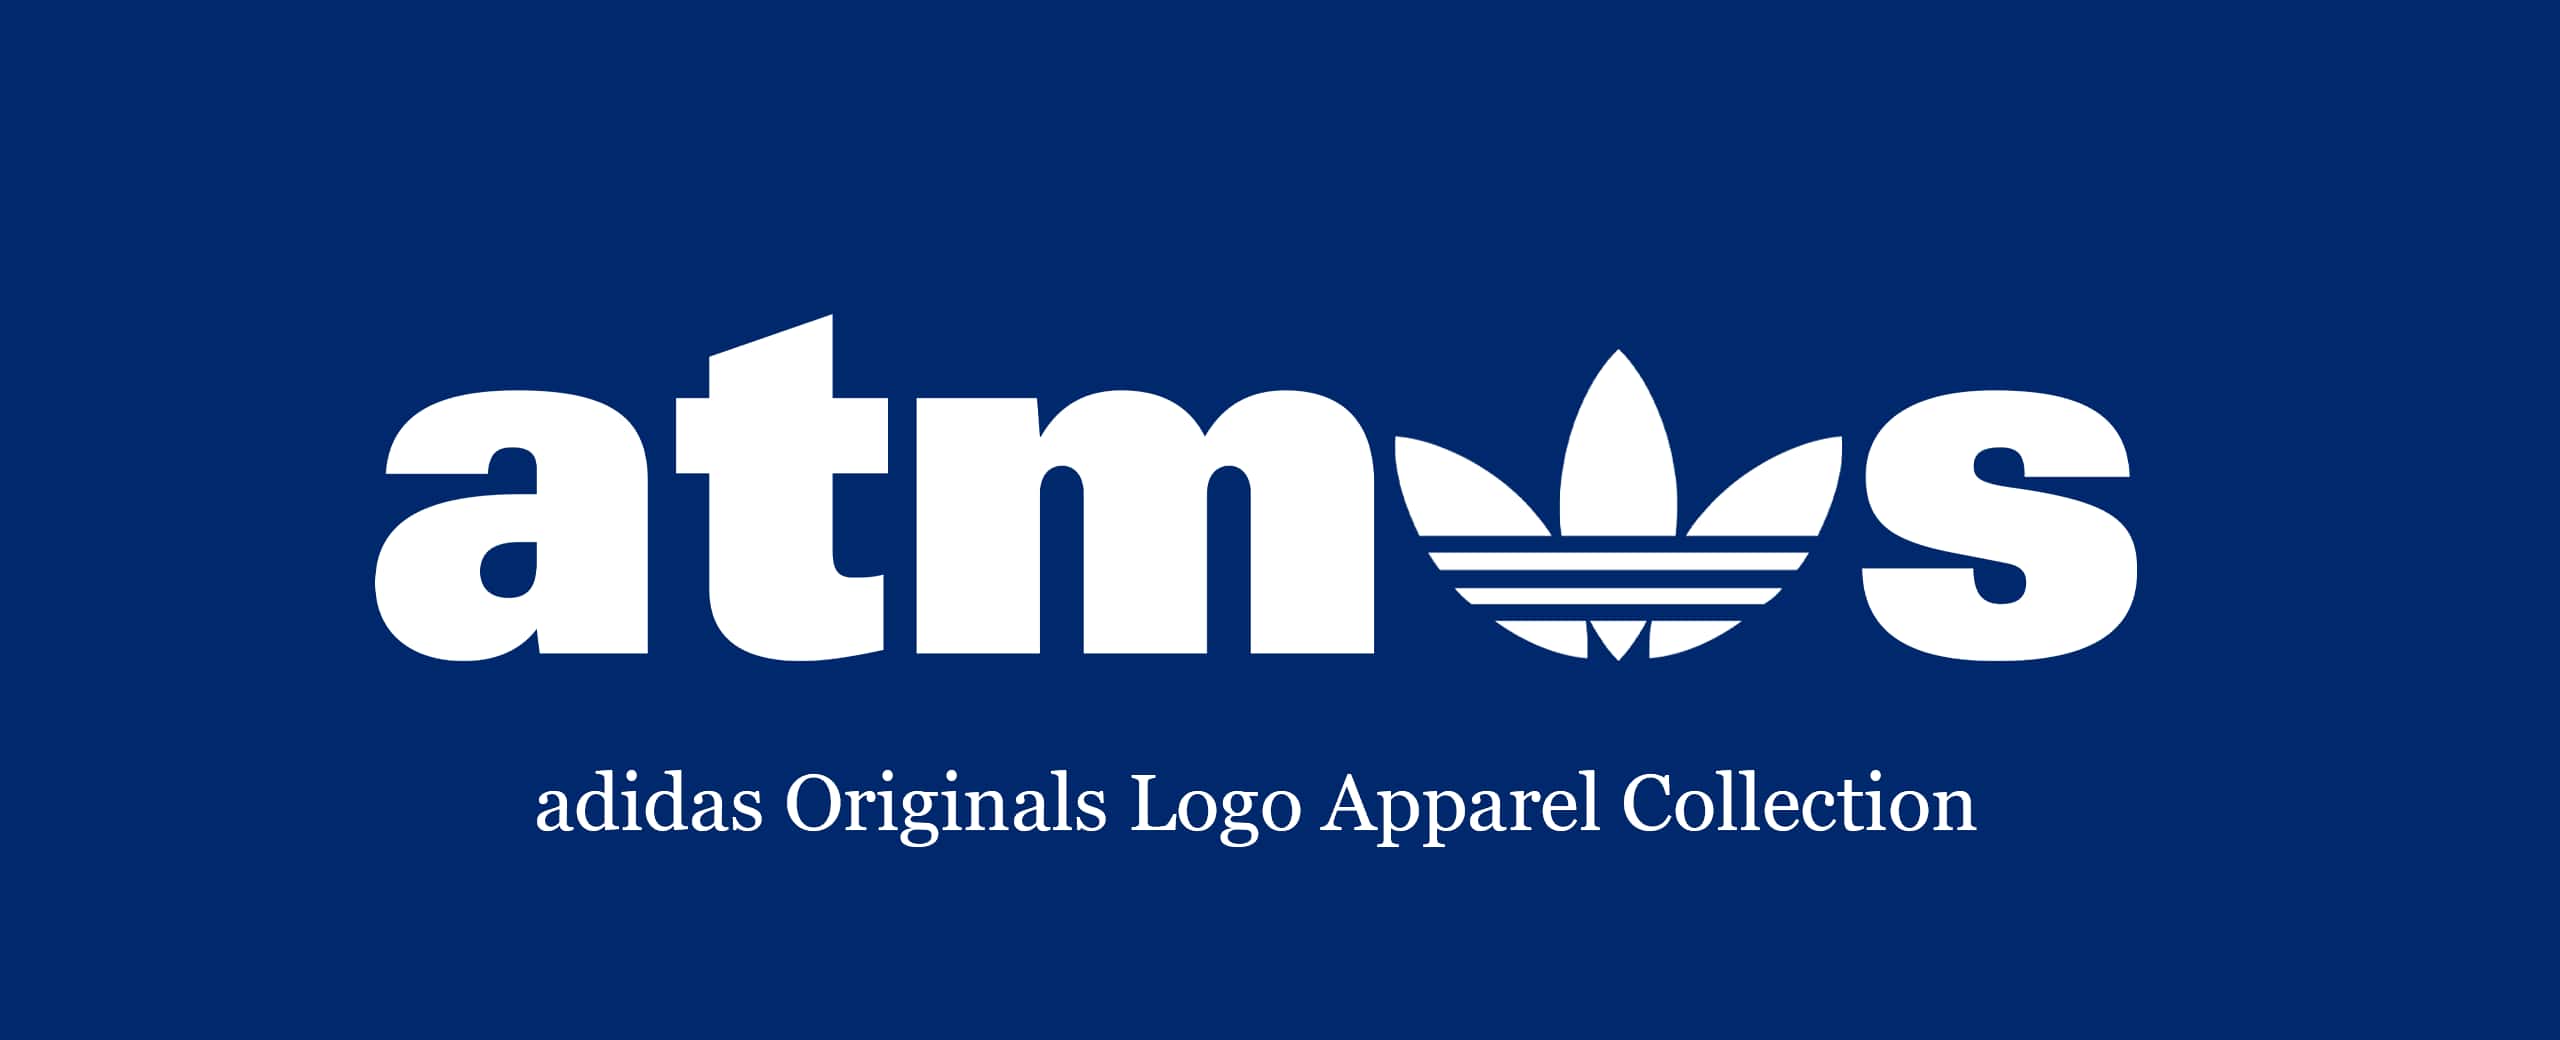 adidas Originals Logo Apparel Collection